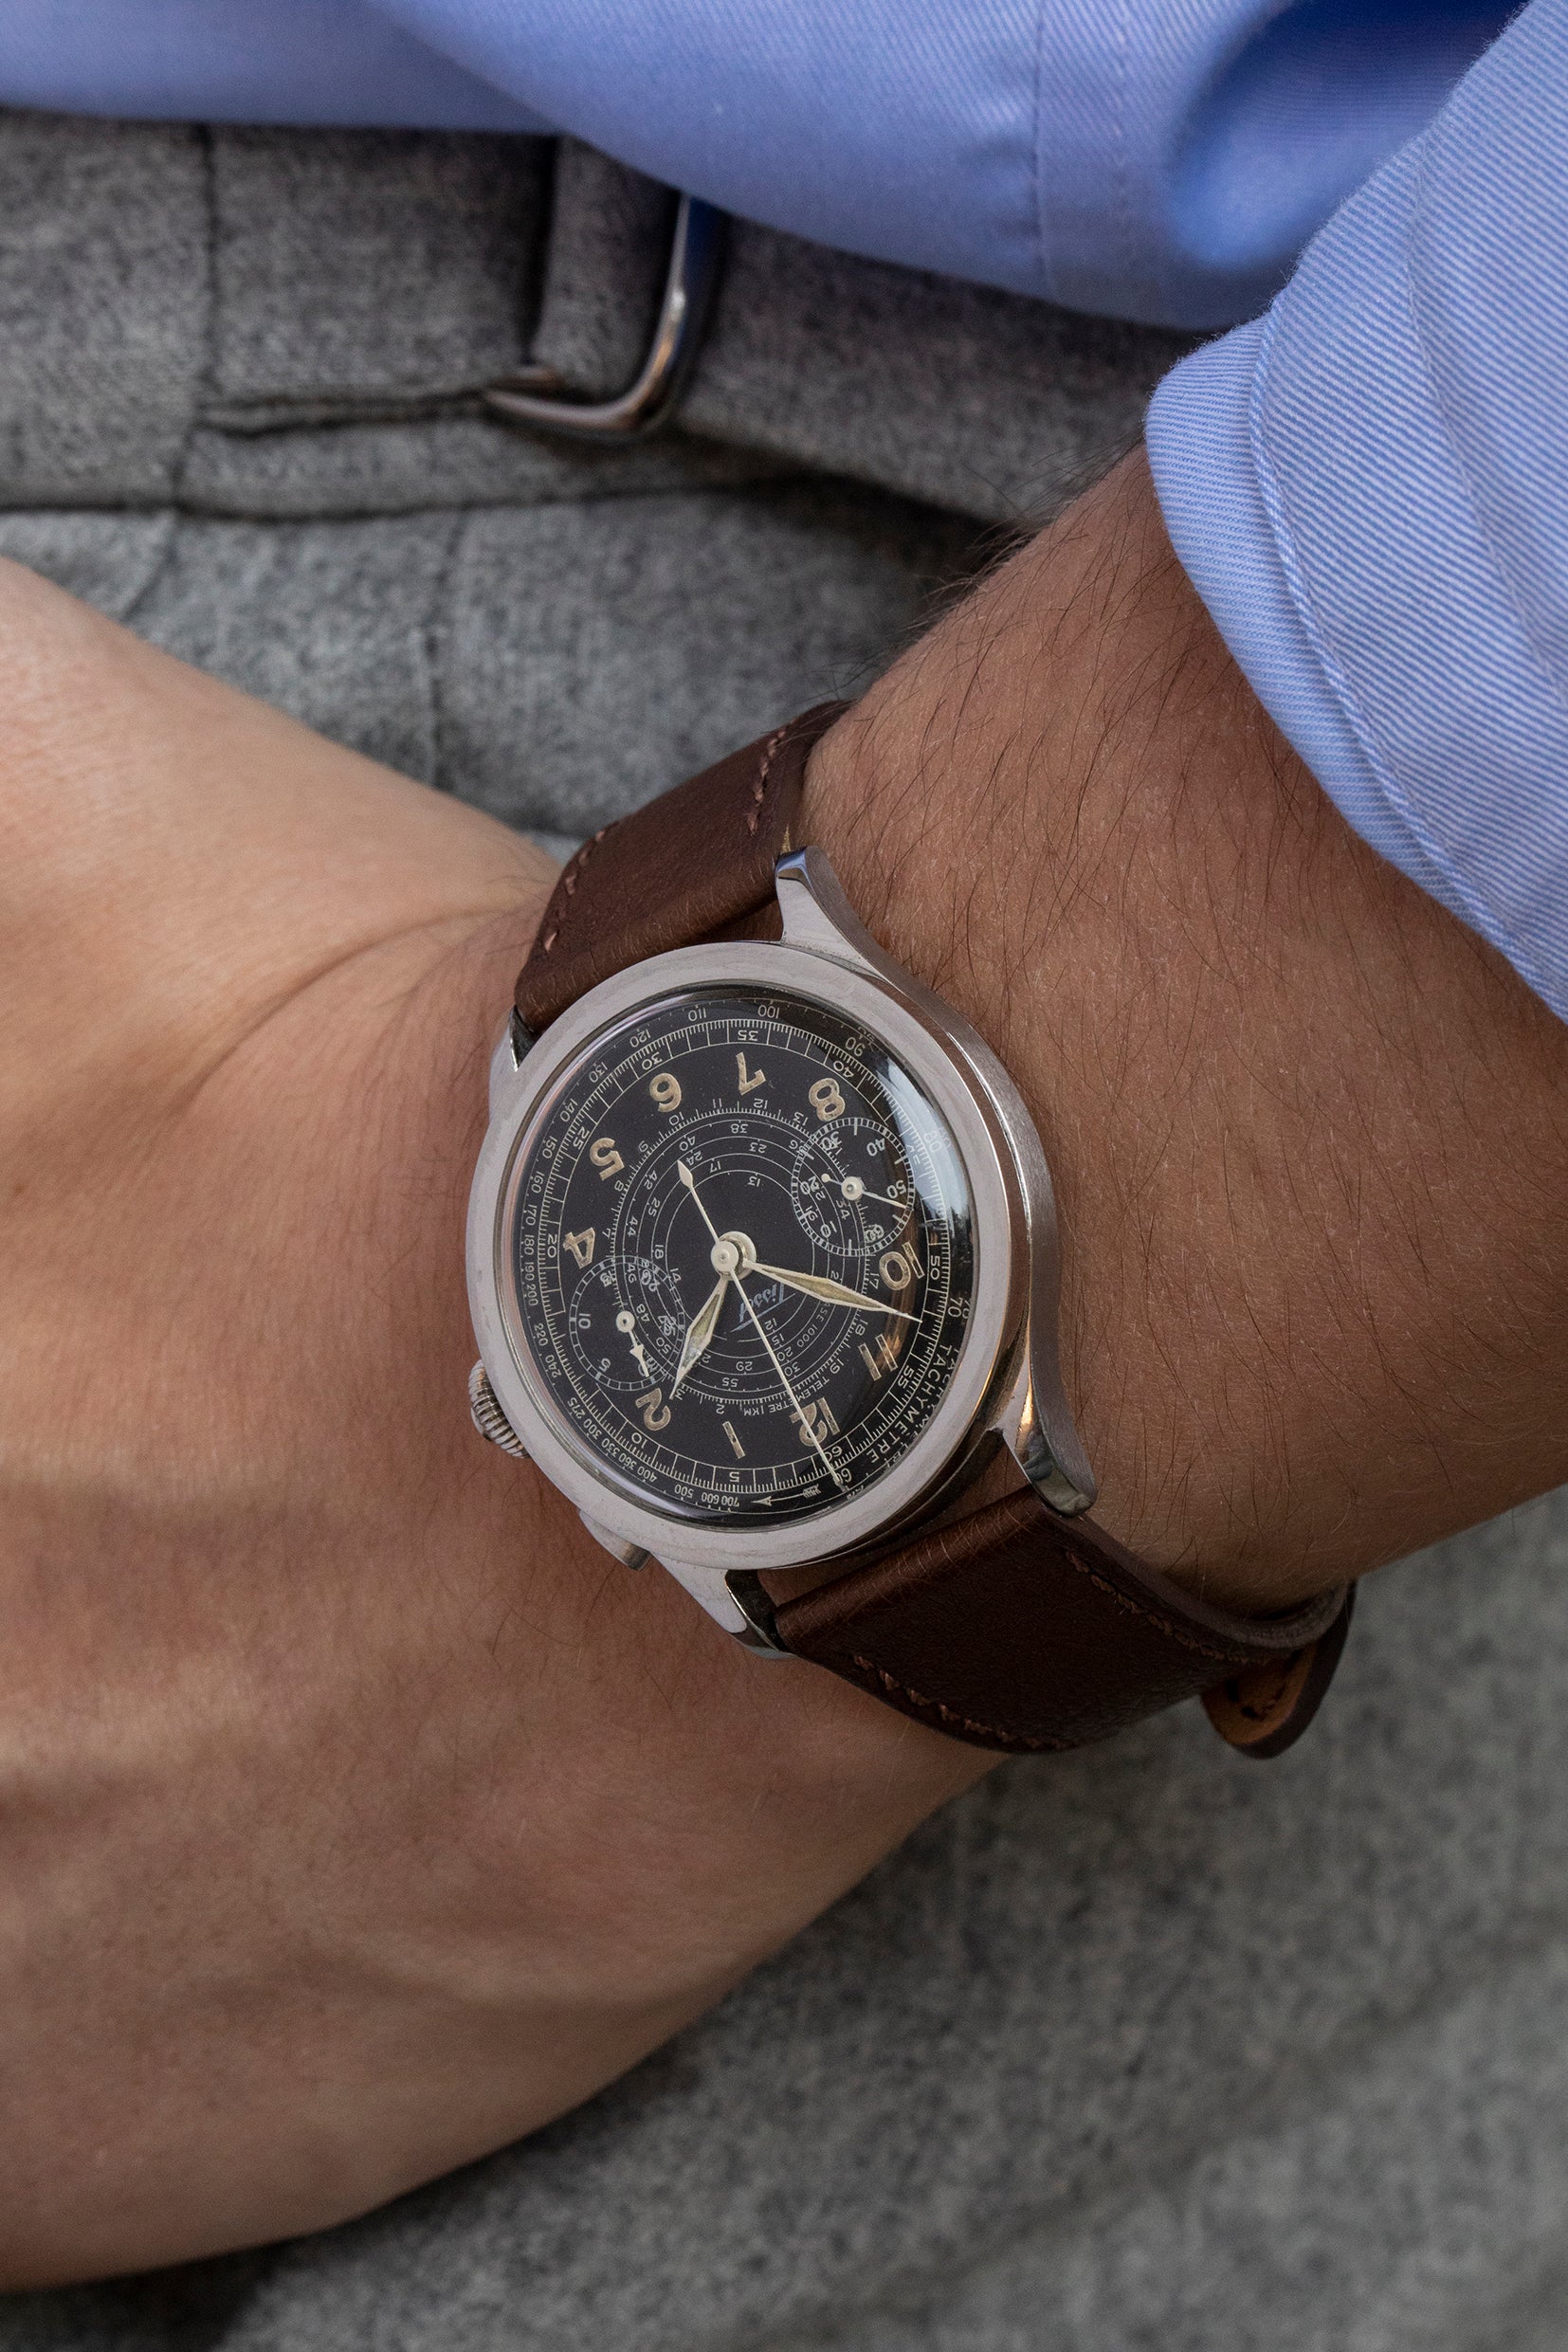 Tissot Vintage watch on a wrist